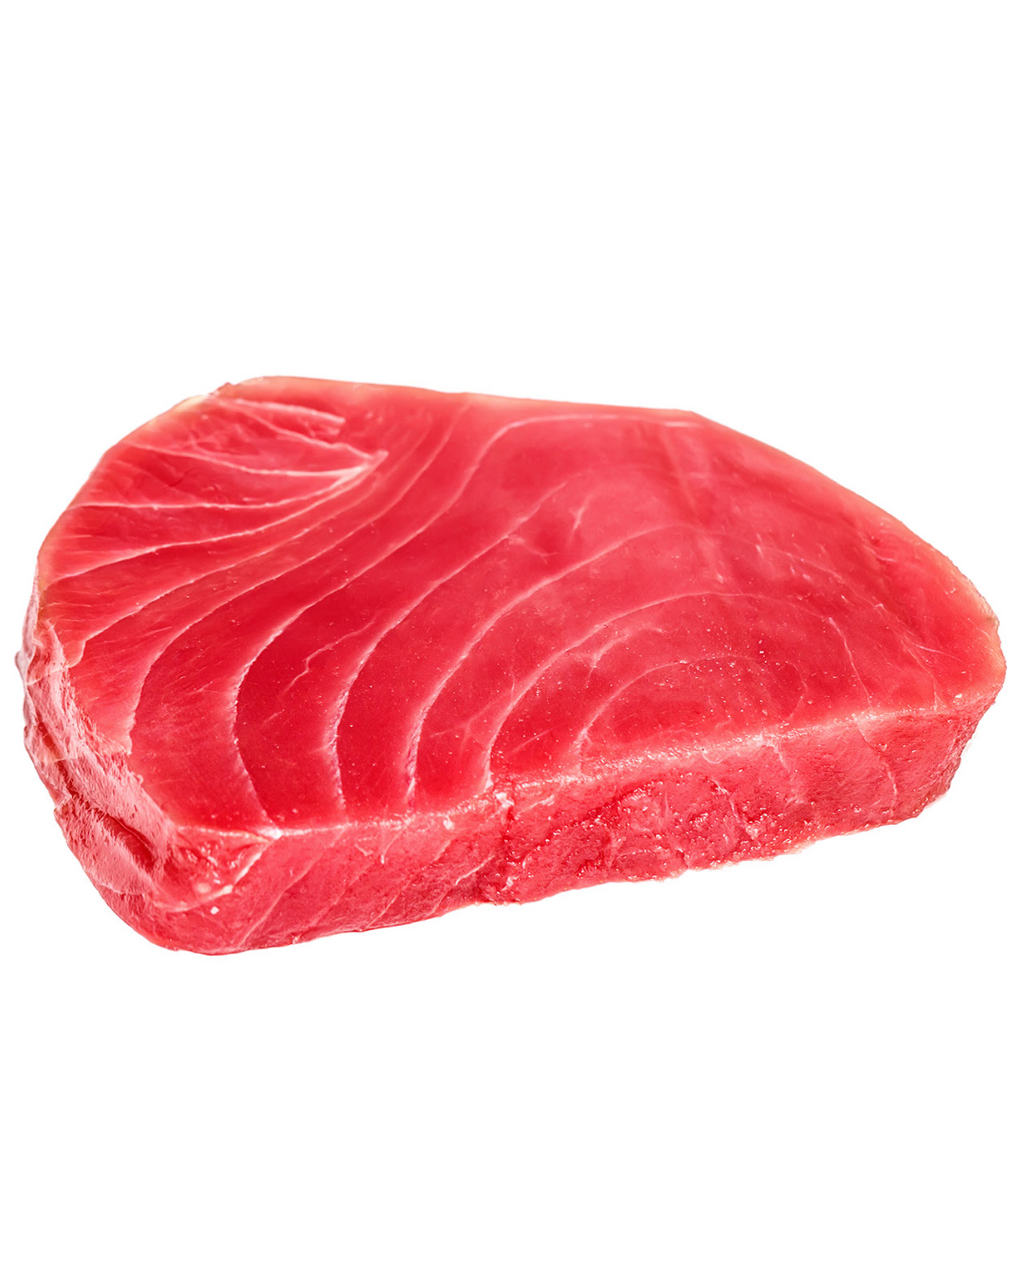 Tuna Steak